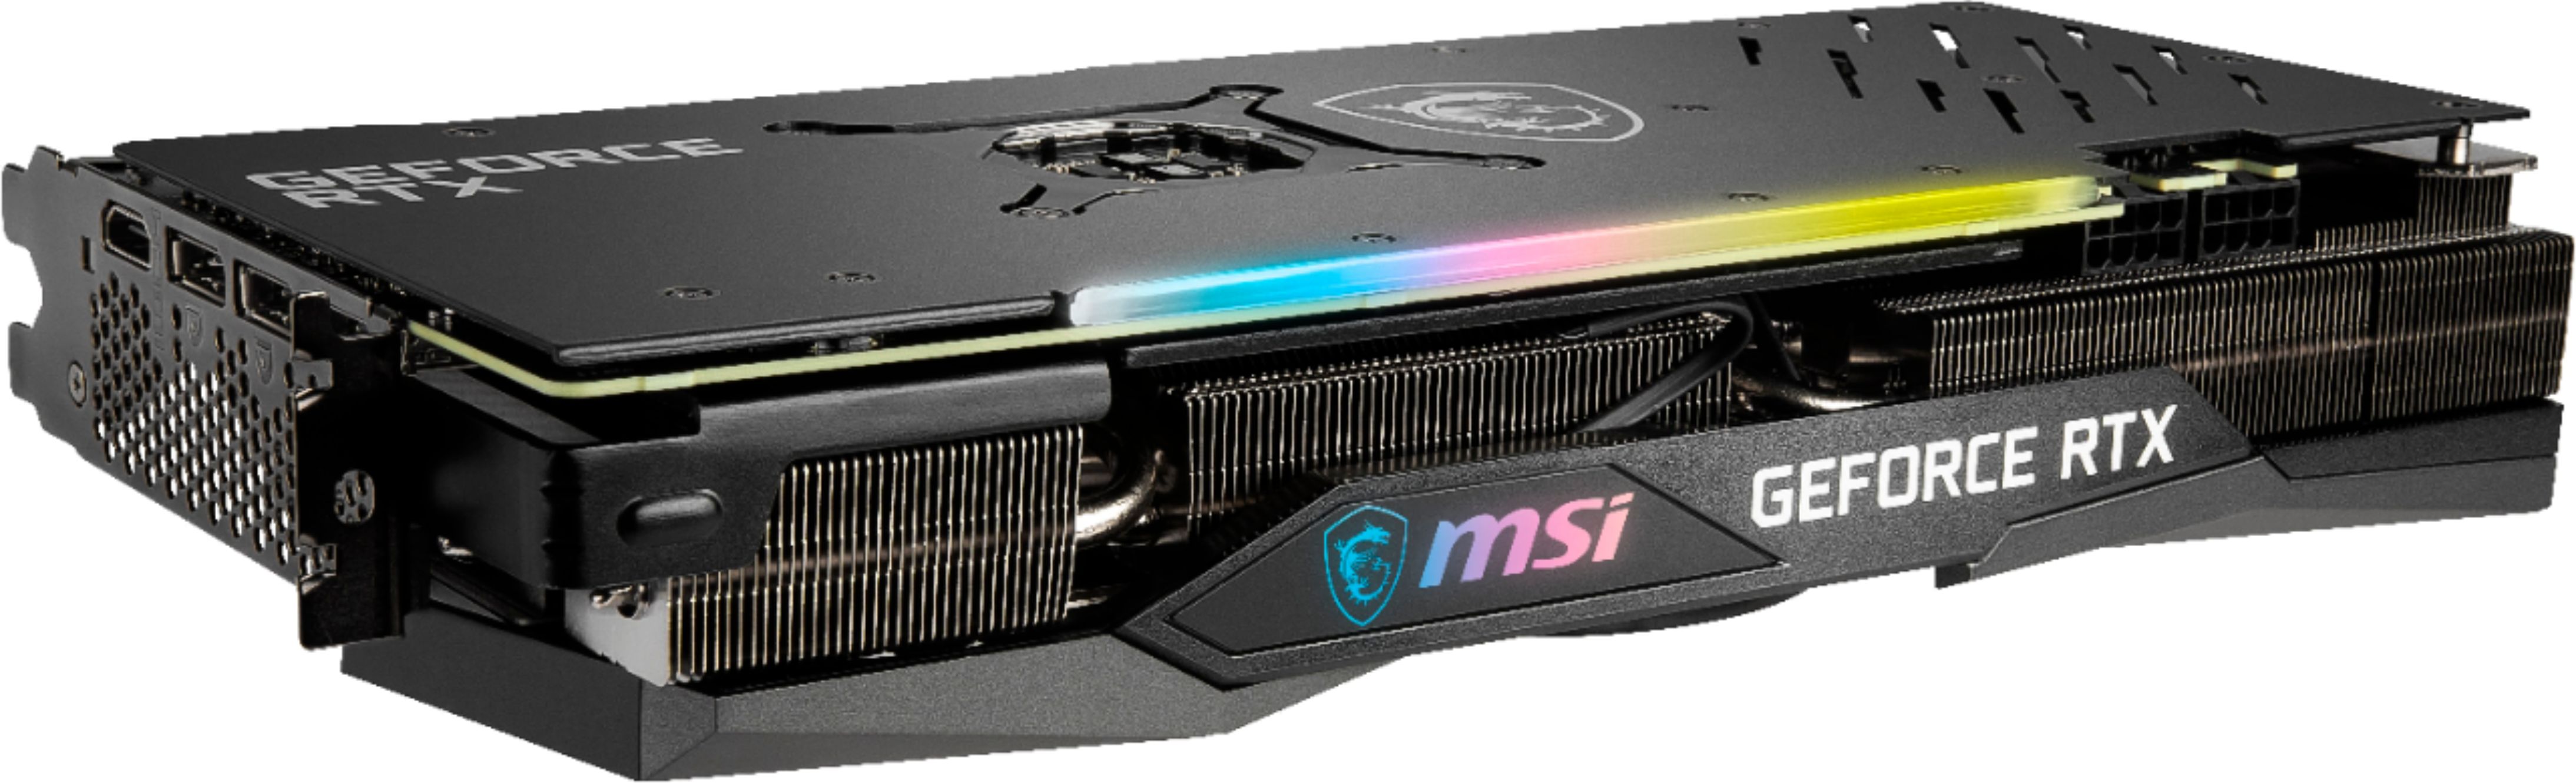 MSI NVIDIA GeForce RTX 3070 Gaming Z Trio LHR 8GB GDDR6 PCI Express 4.0  Graphics Card Black RTX 3070 Gaming Z Trio LHR - Best Buy